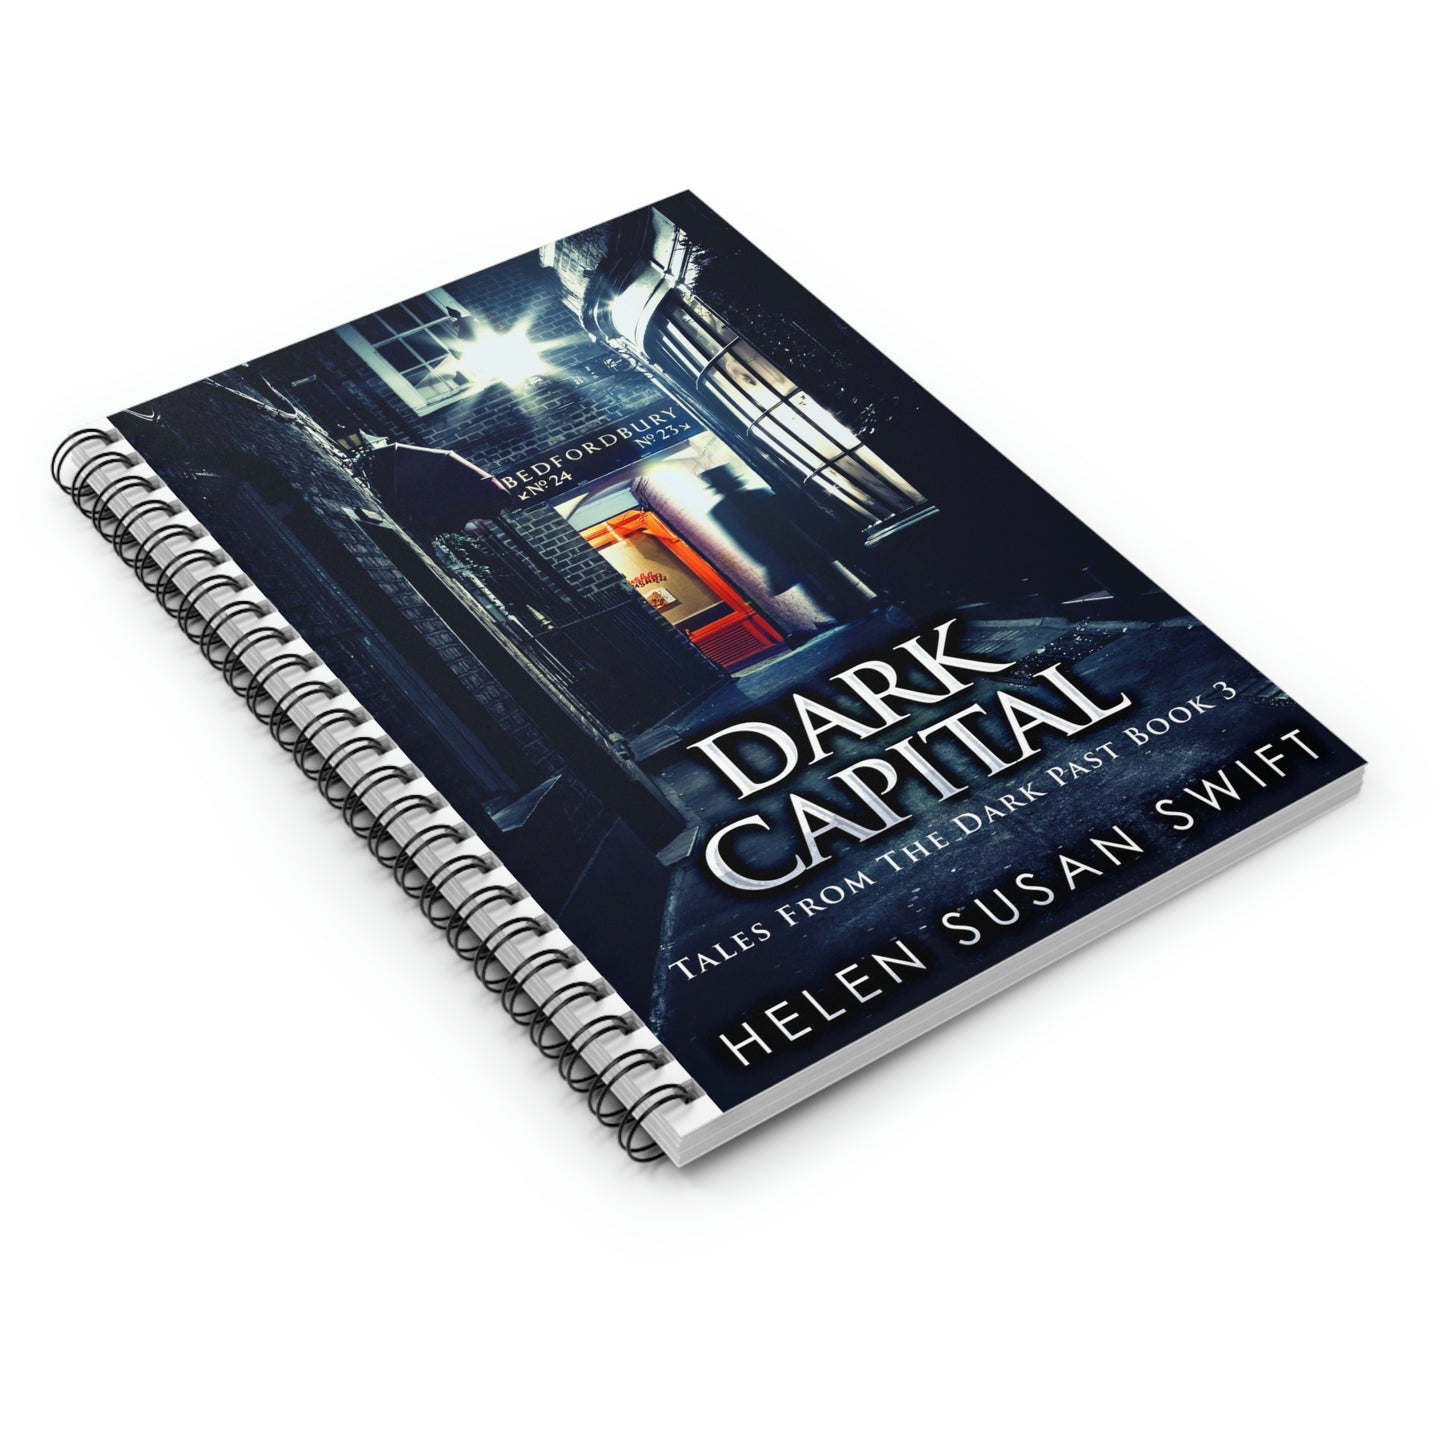 Dark Capital - Spiral Notebook